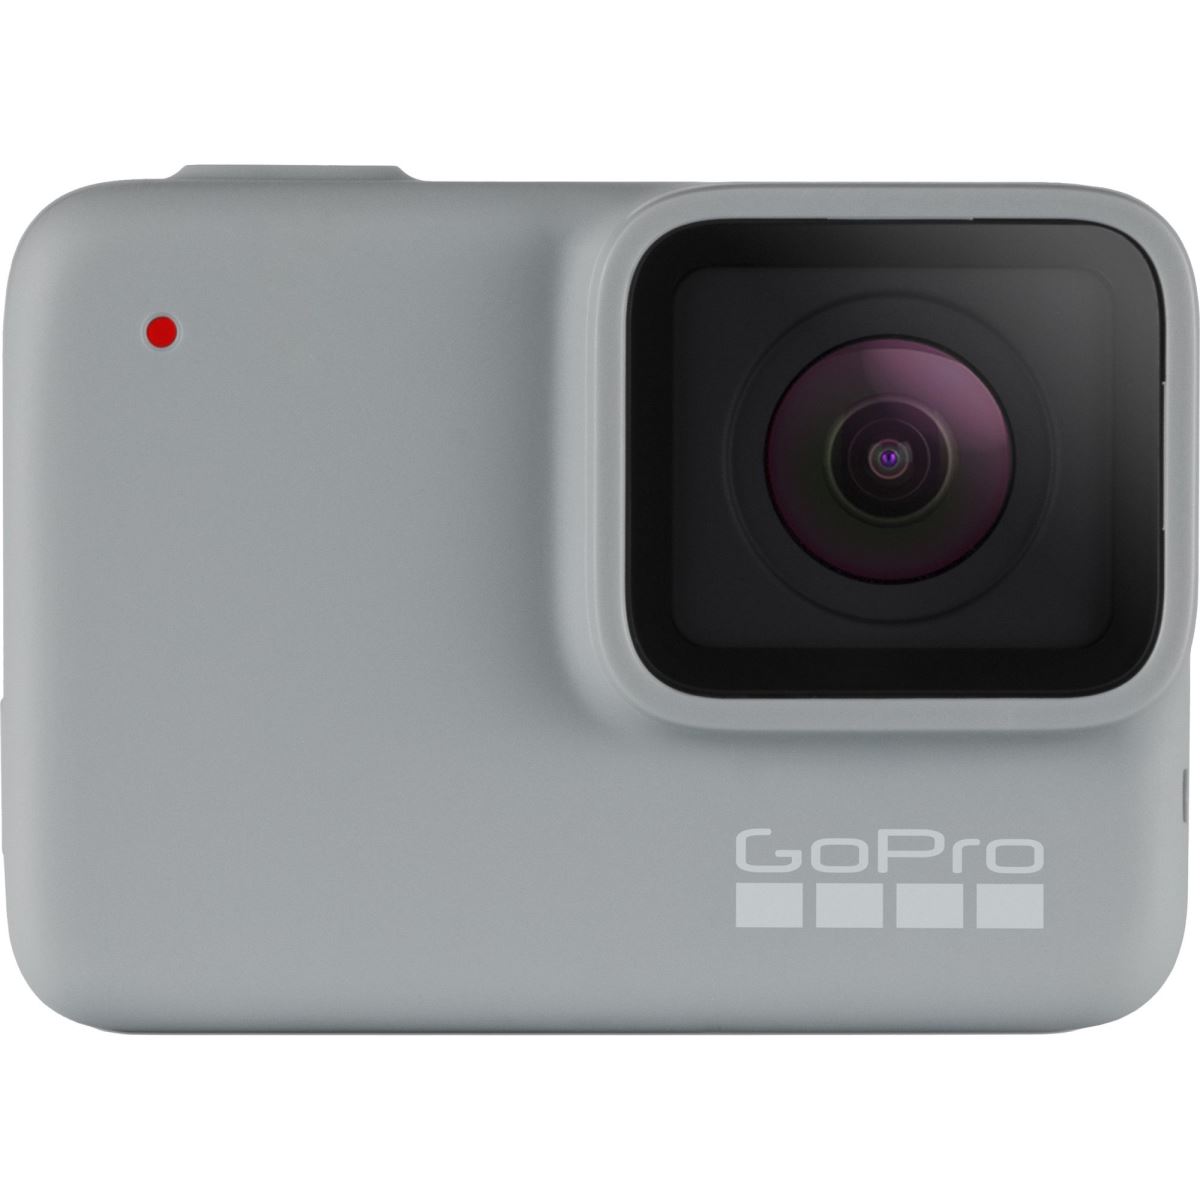 video sport GoPro HERO7 White - avantajos - Ideall.ro